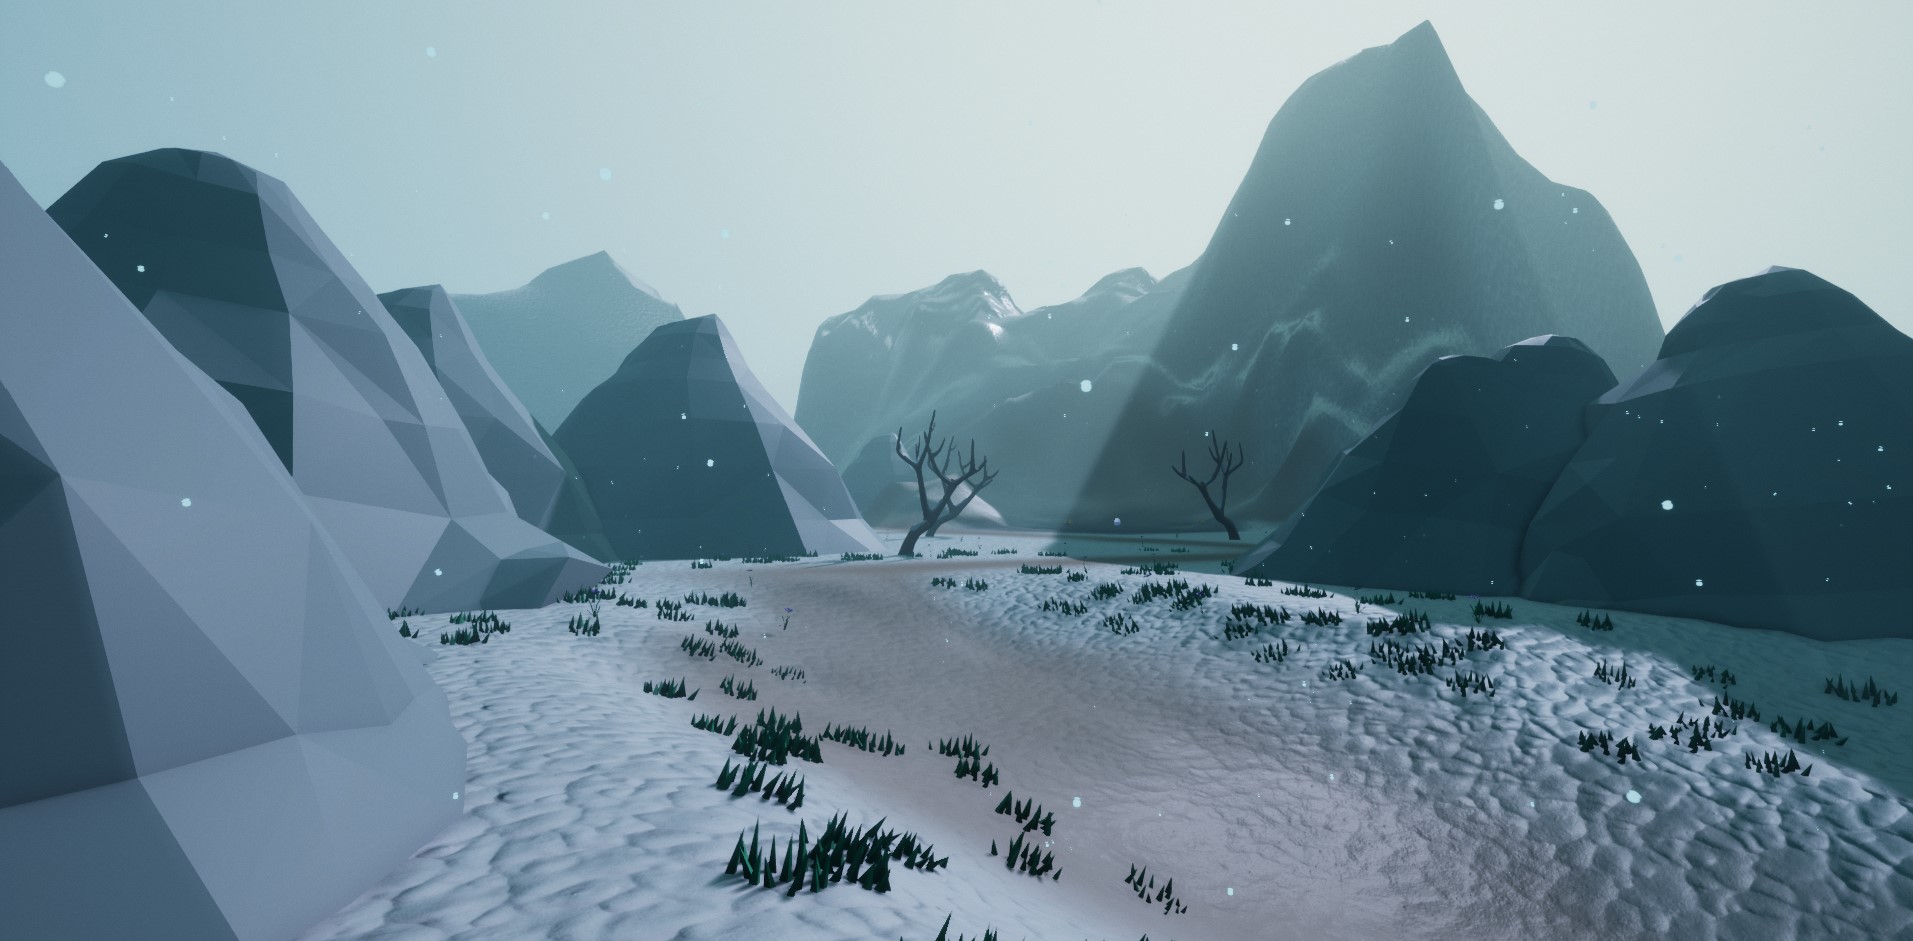 BSc Games Development work by Joshua Brinton, showing a snowy mountain.